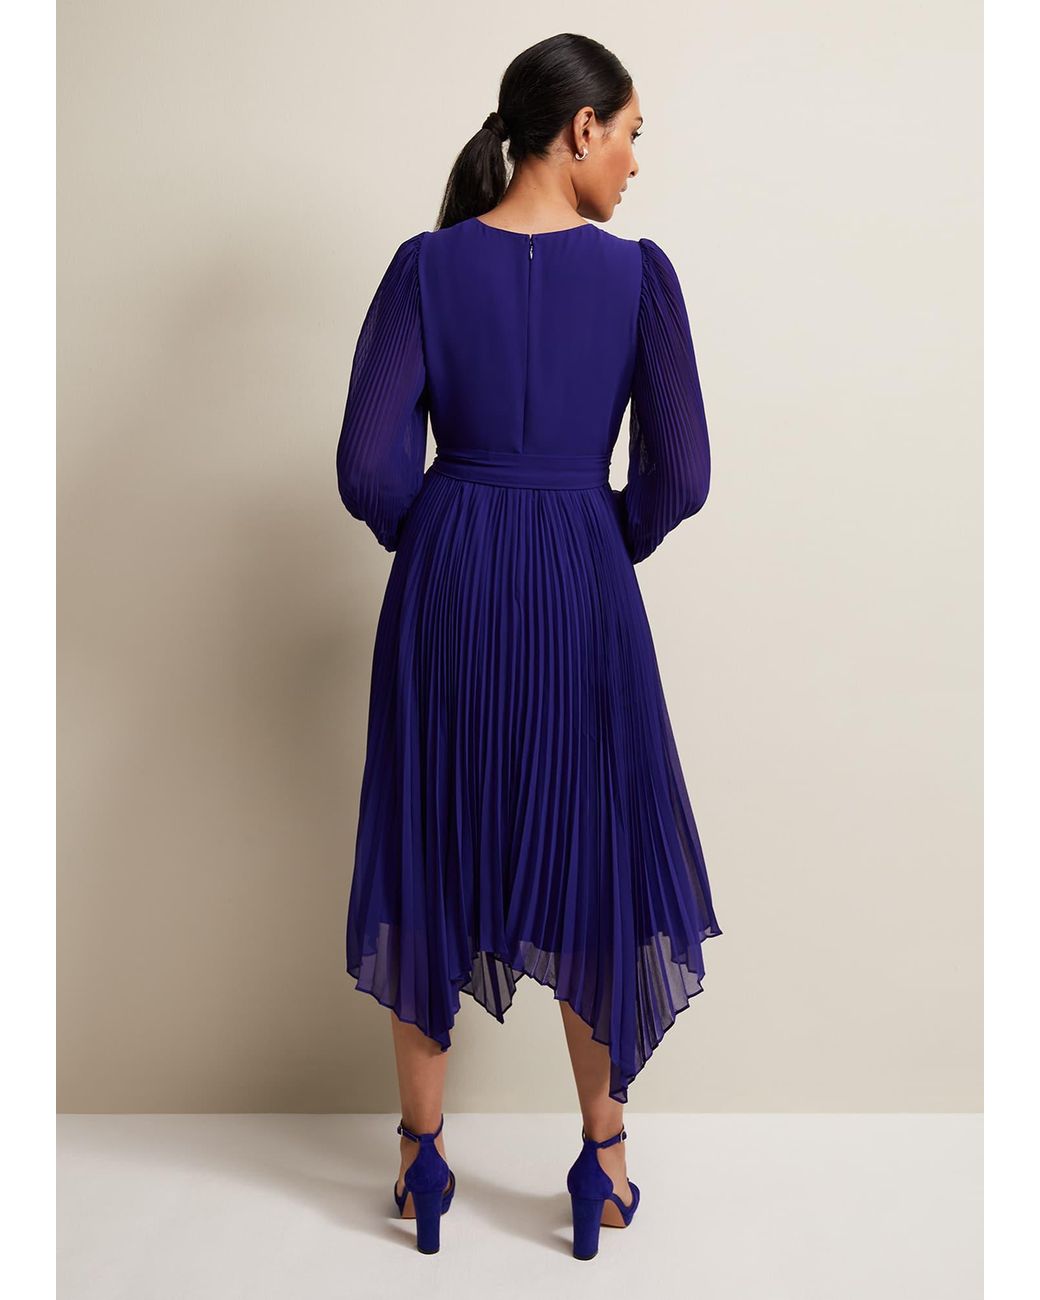 Phase Eight Tiffany Lace Pleated Midi Dress, Cobalt, 6